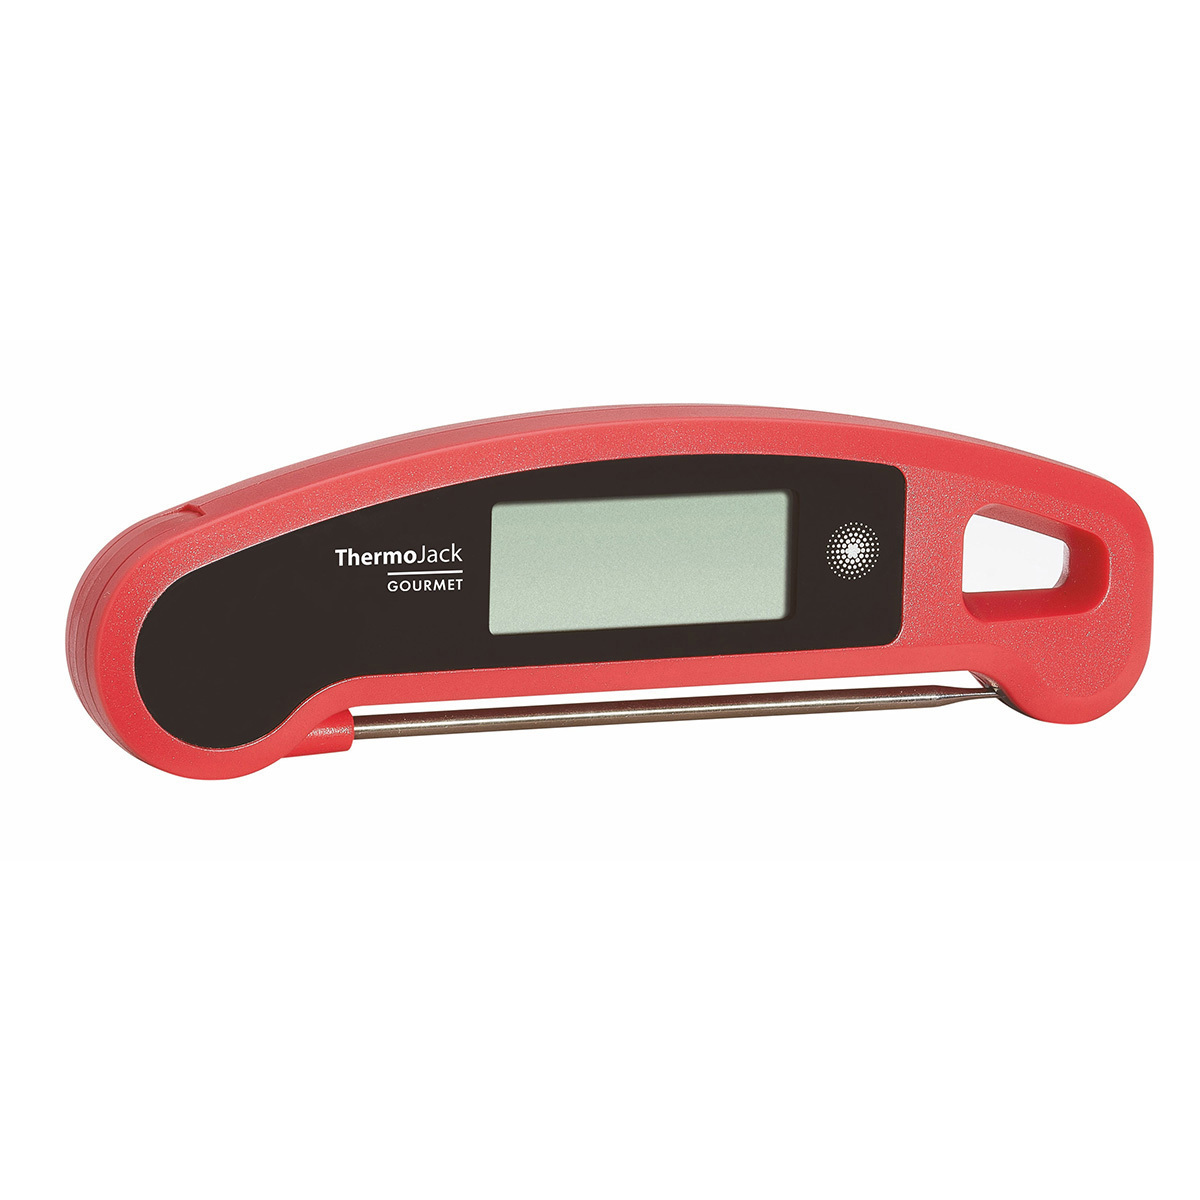 30-1060-05-profi-küchenthermometer-thermo-jack-gourmet-ansicht1-1200x1200px.jpg